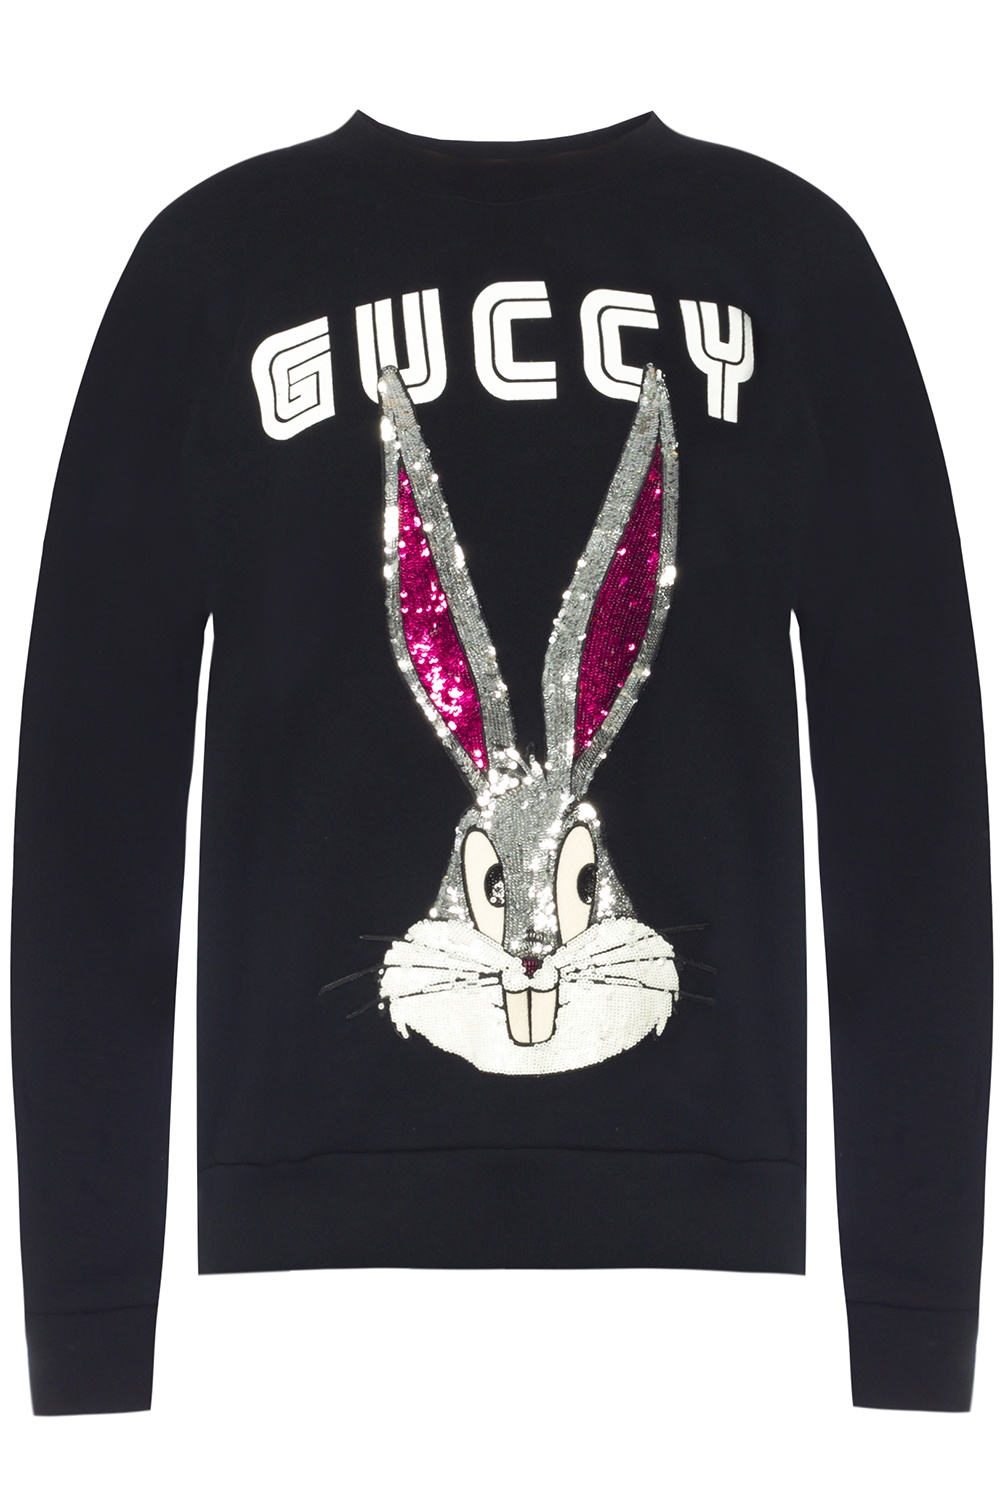 gucci bugs bunny hoodie